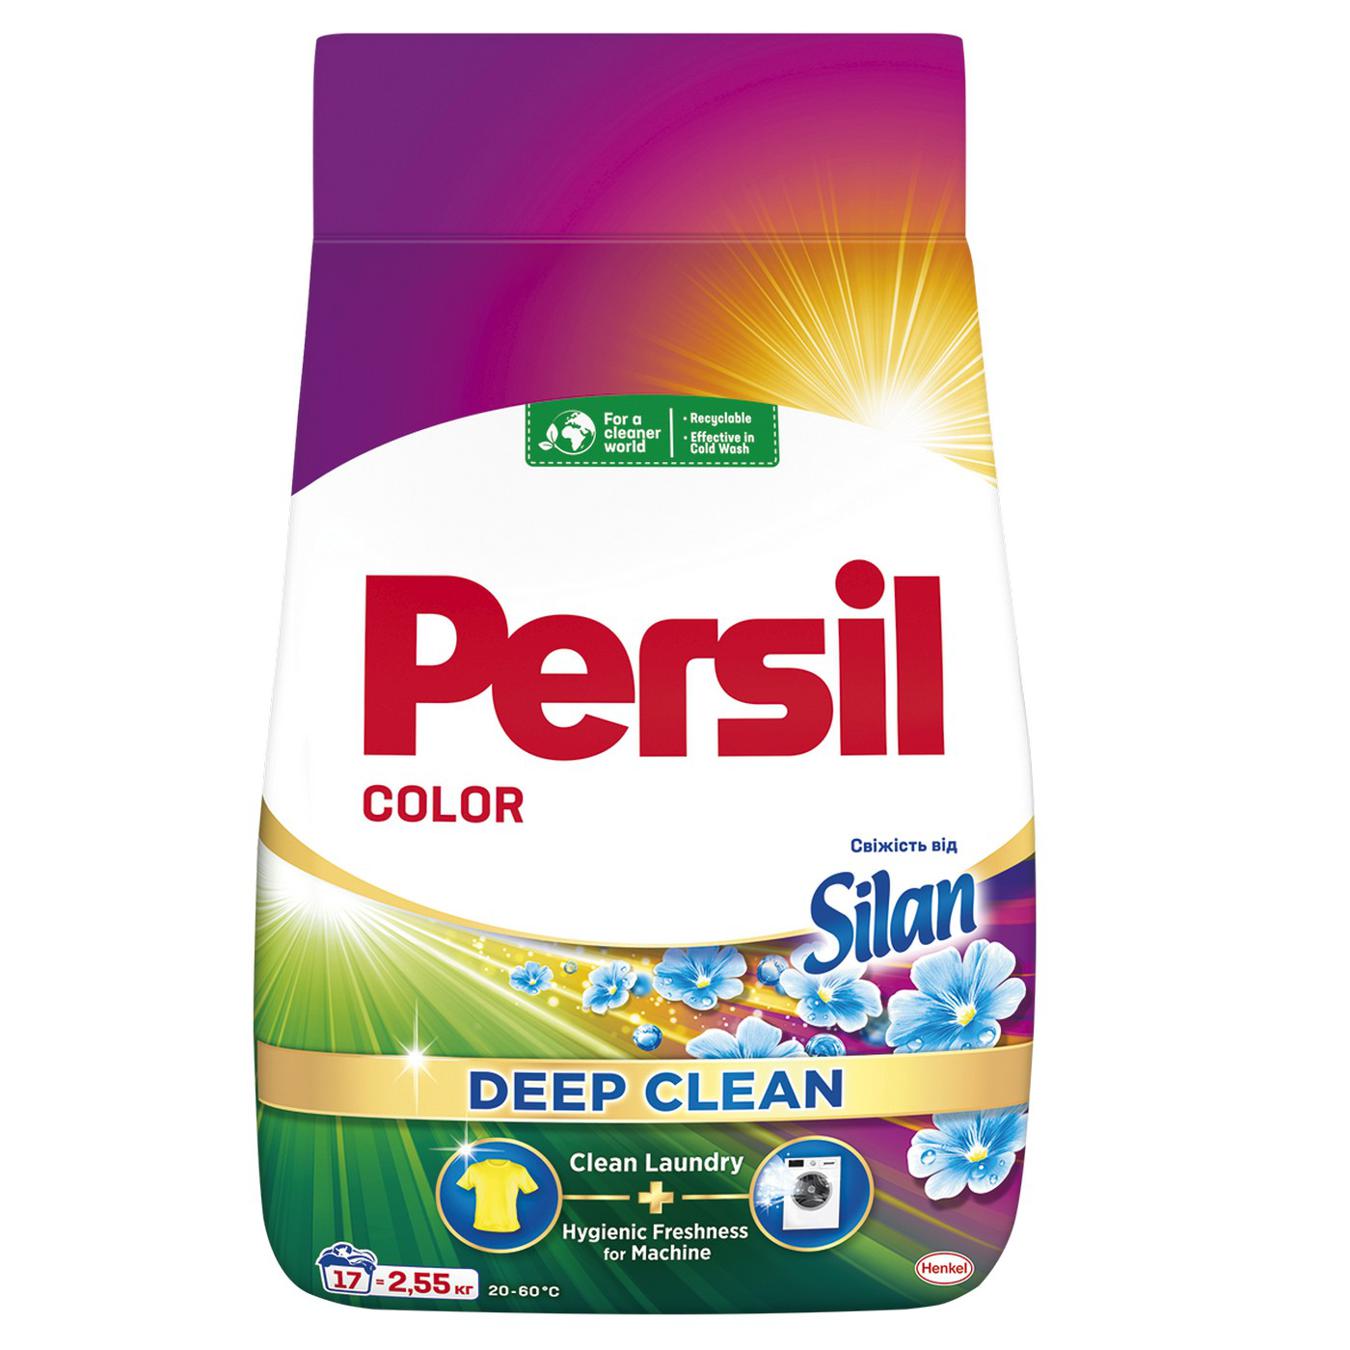 Washing powder Persil Color Freshness from Silan machine 2.55 kg